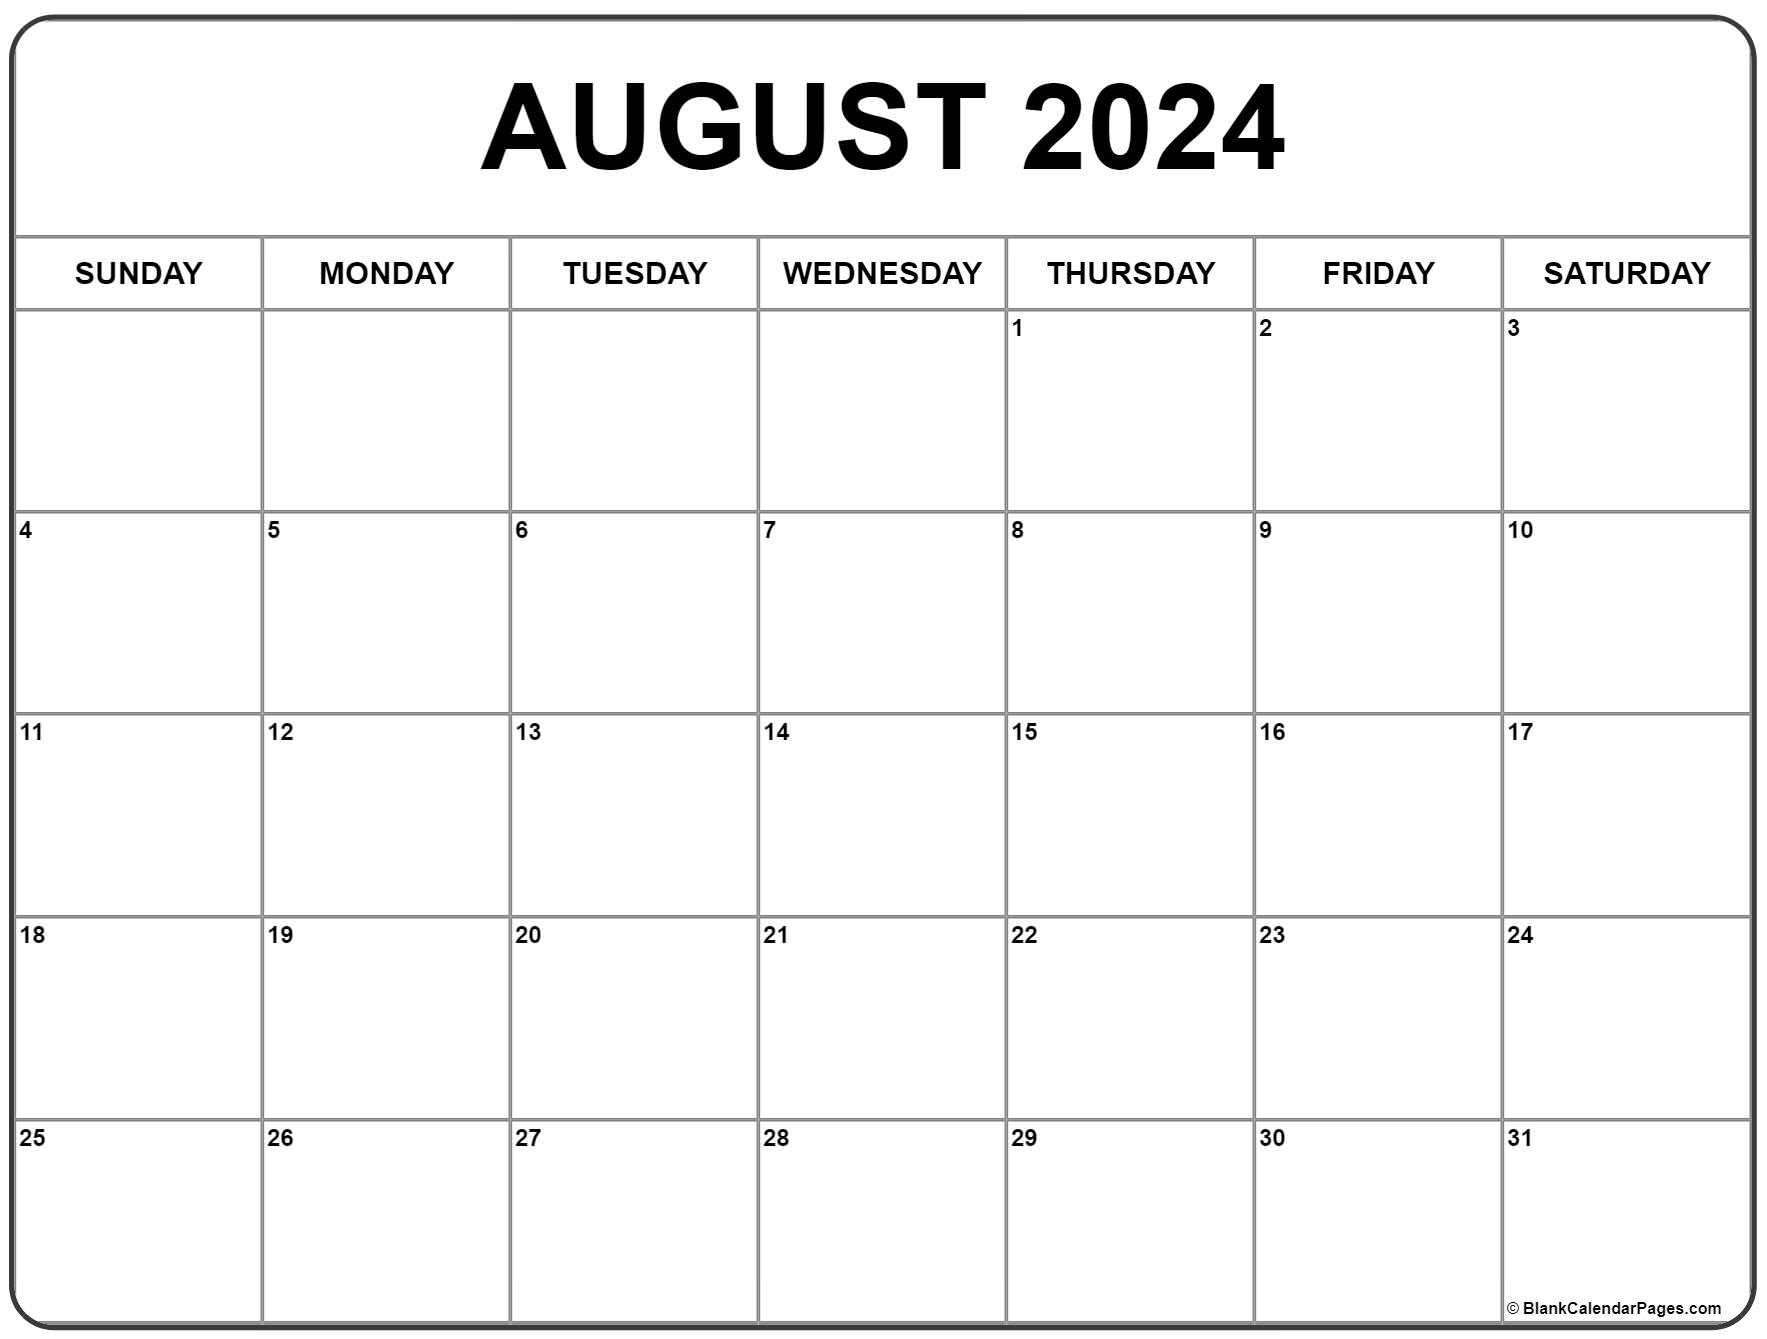 August 2024 Calendar | Free Printable Calendar for Printable August Calendar 2024